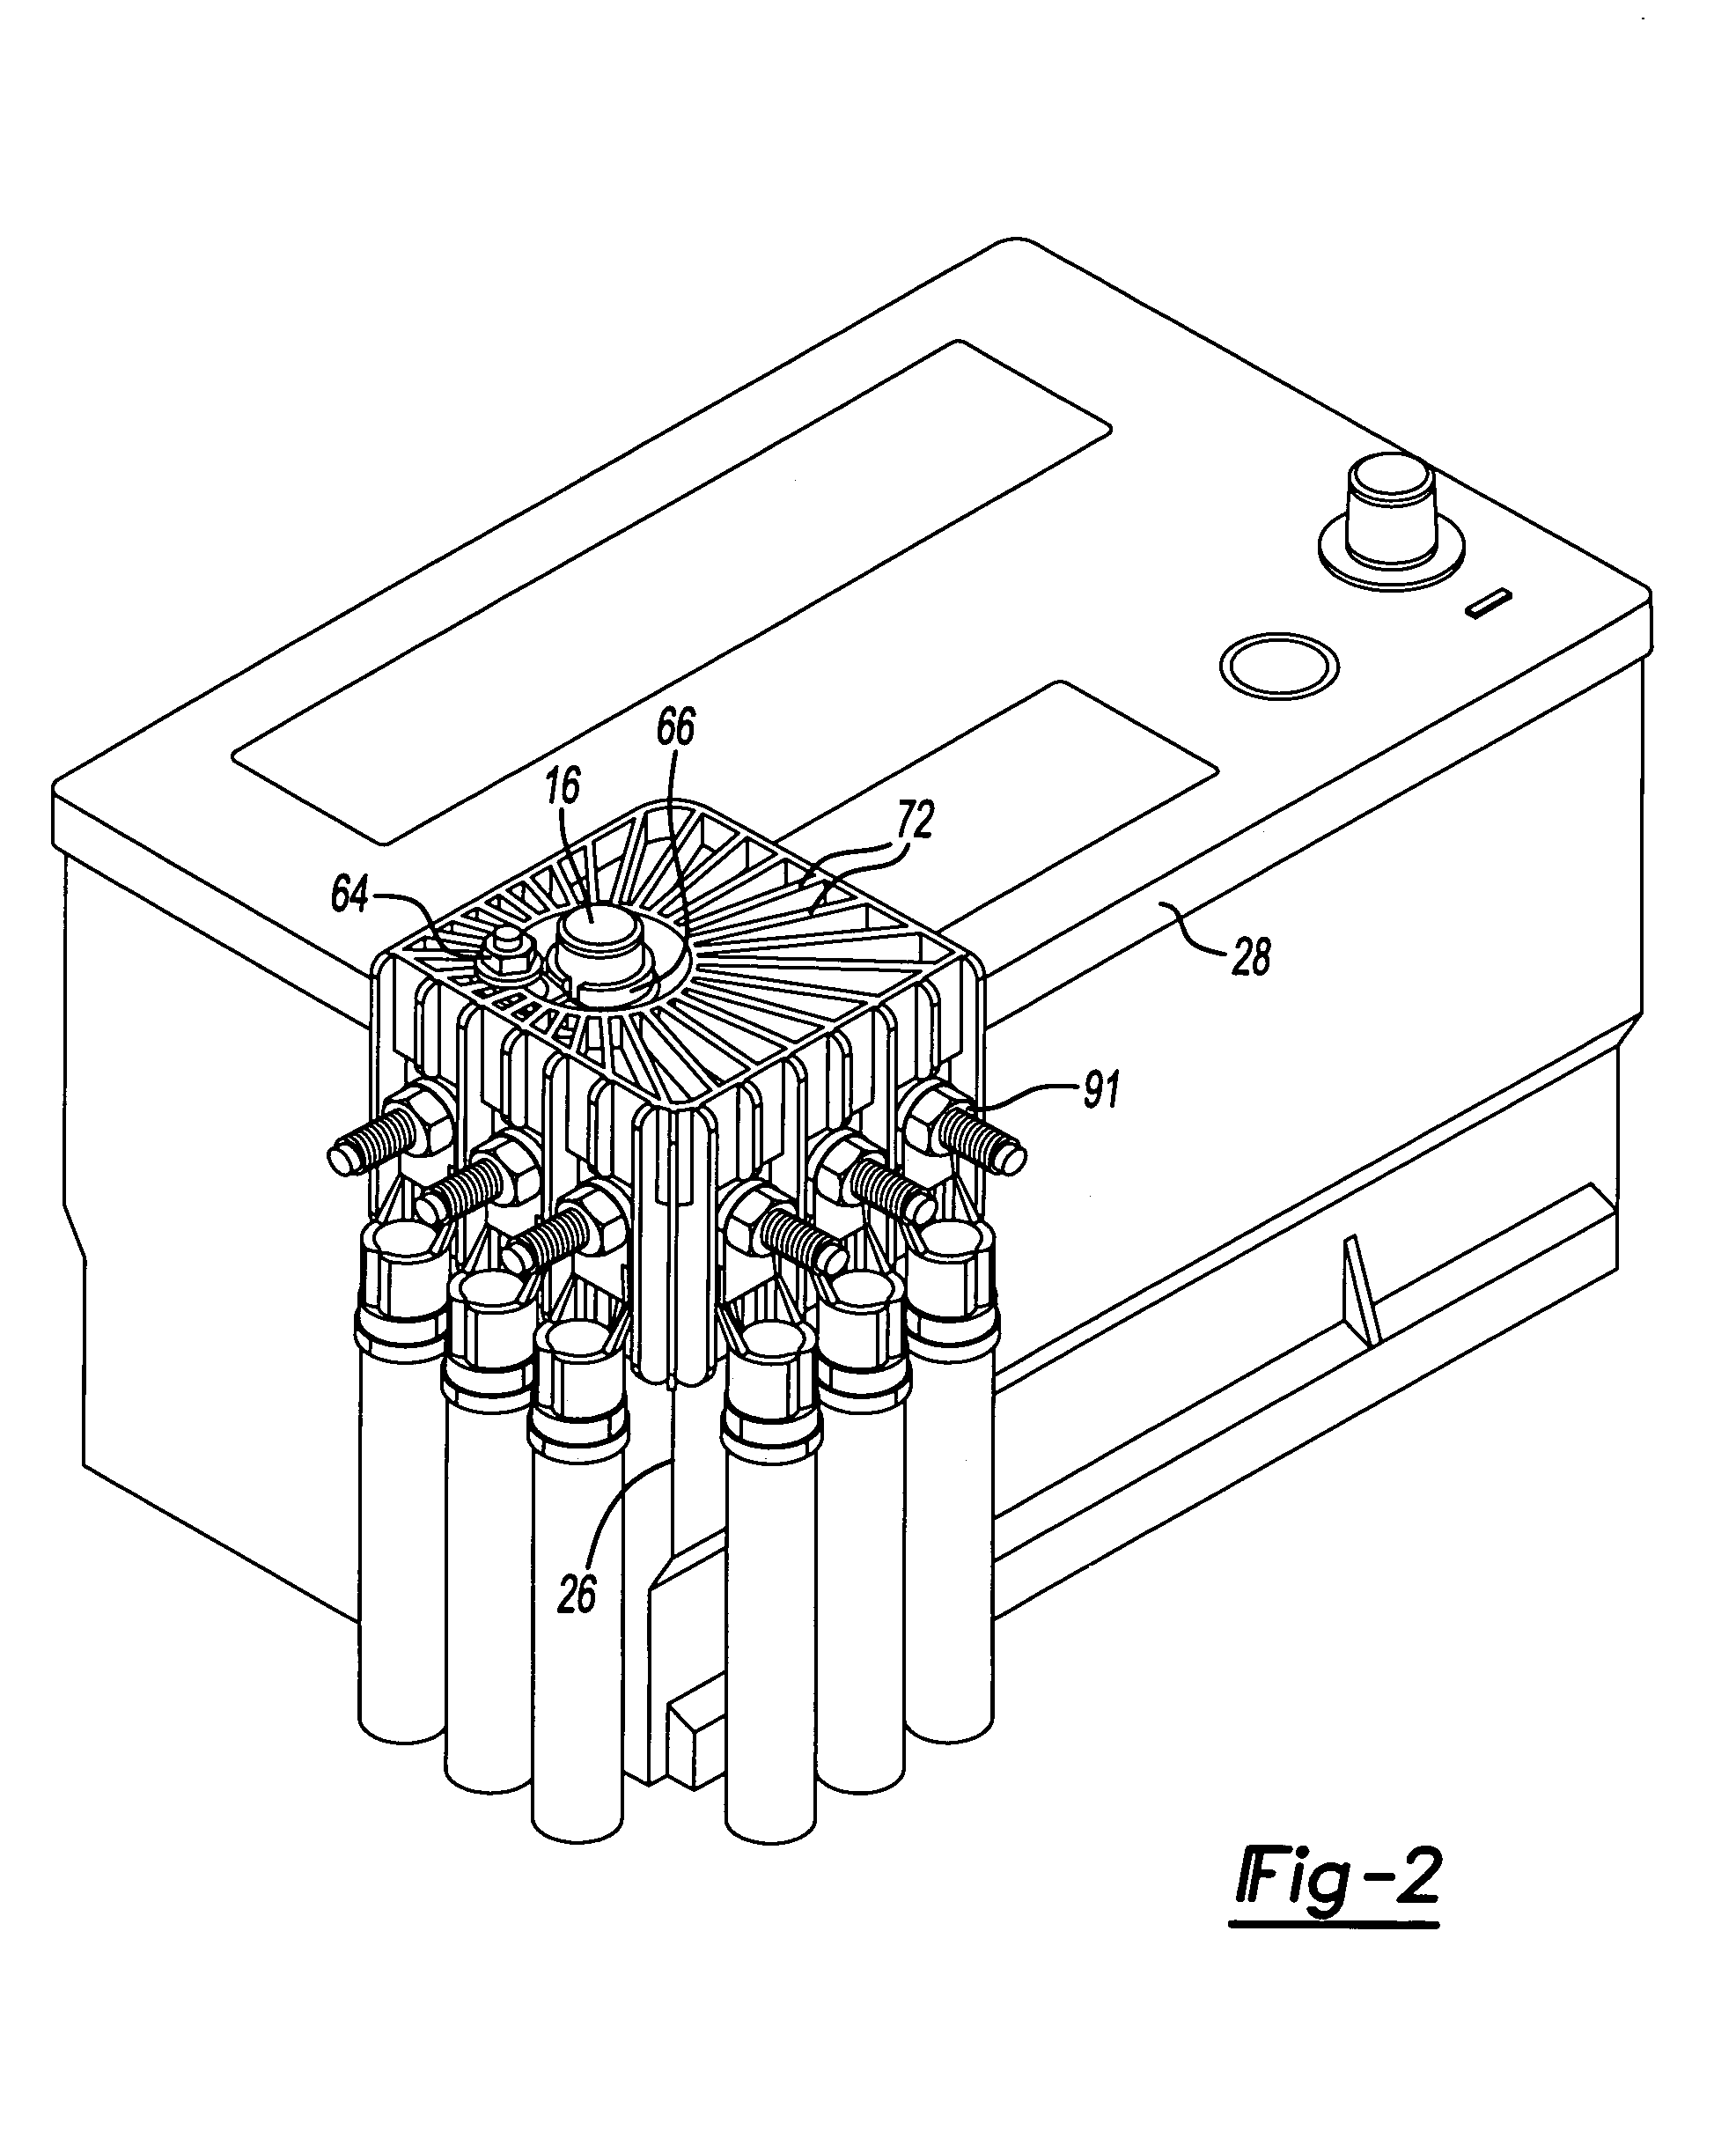 Corner-mounted battery fuse